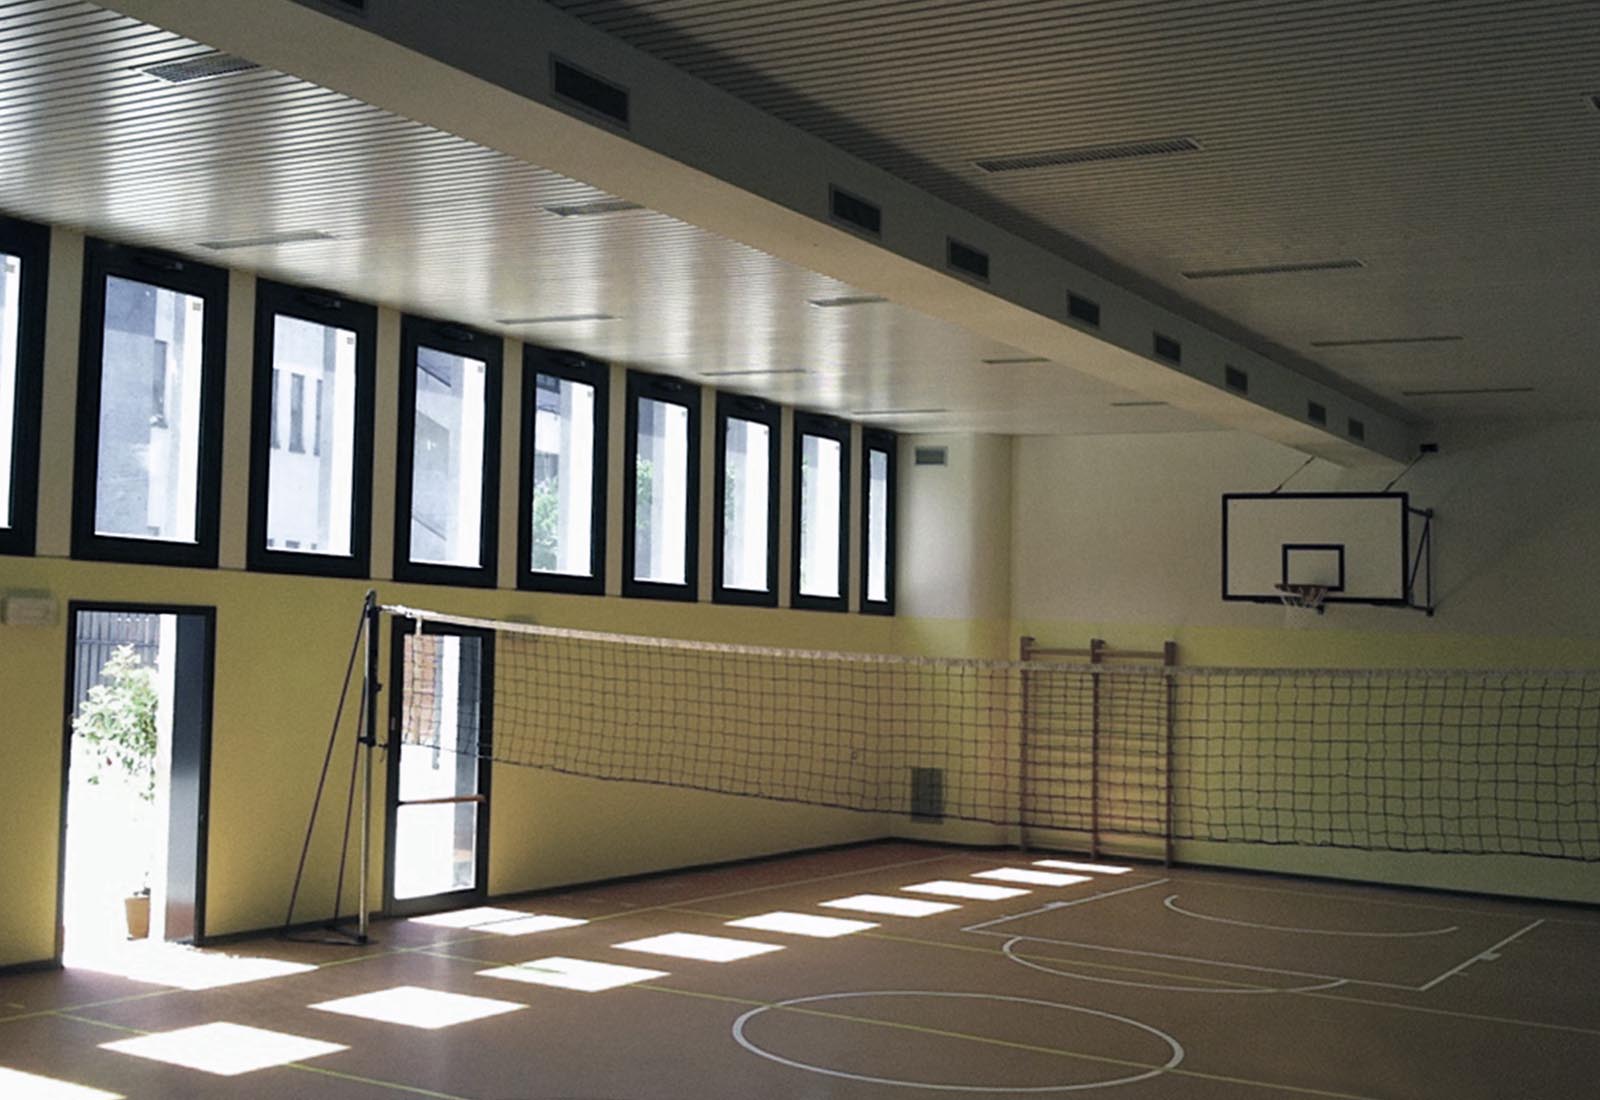 Manzoni school center in Milan - The gym